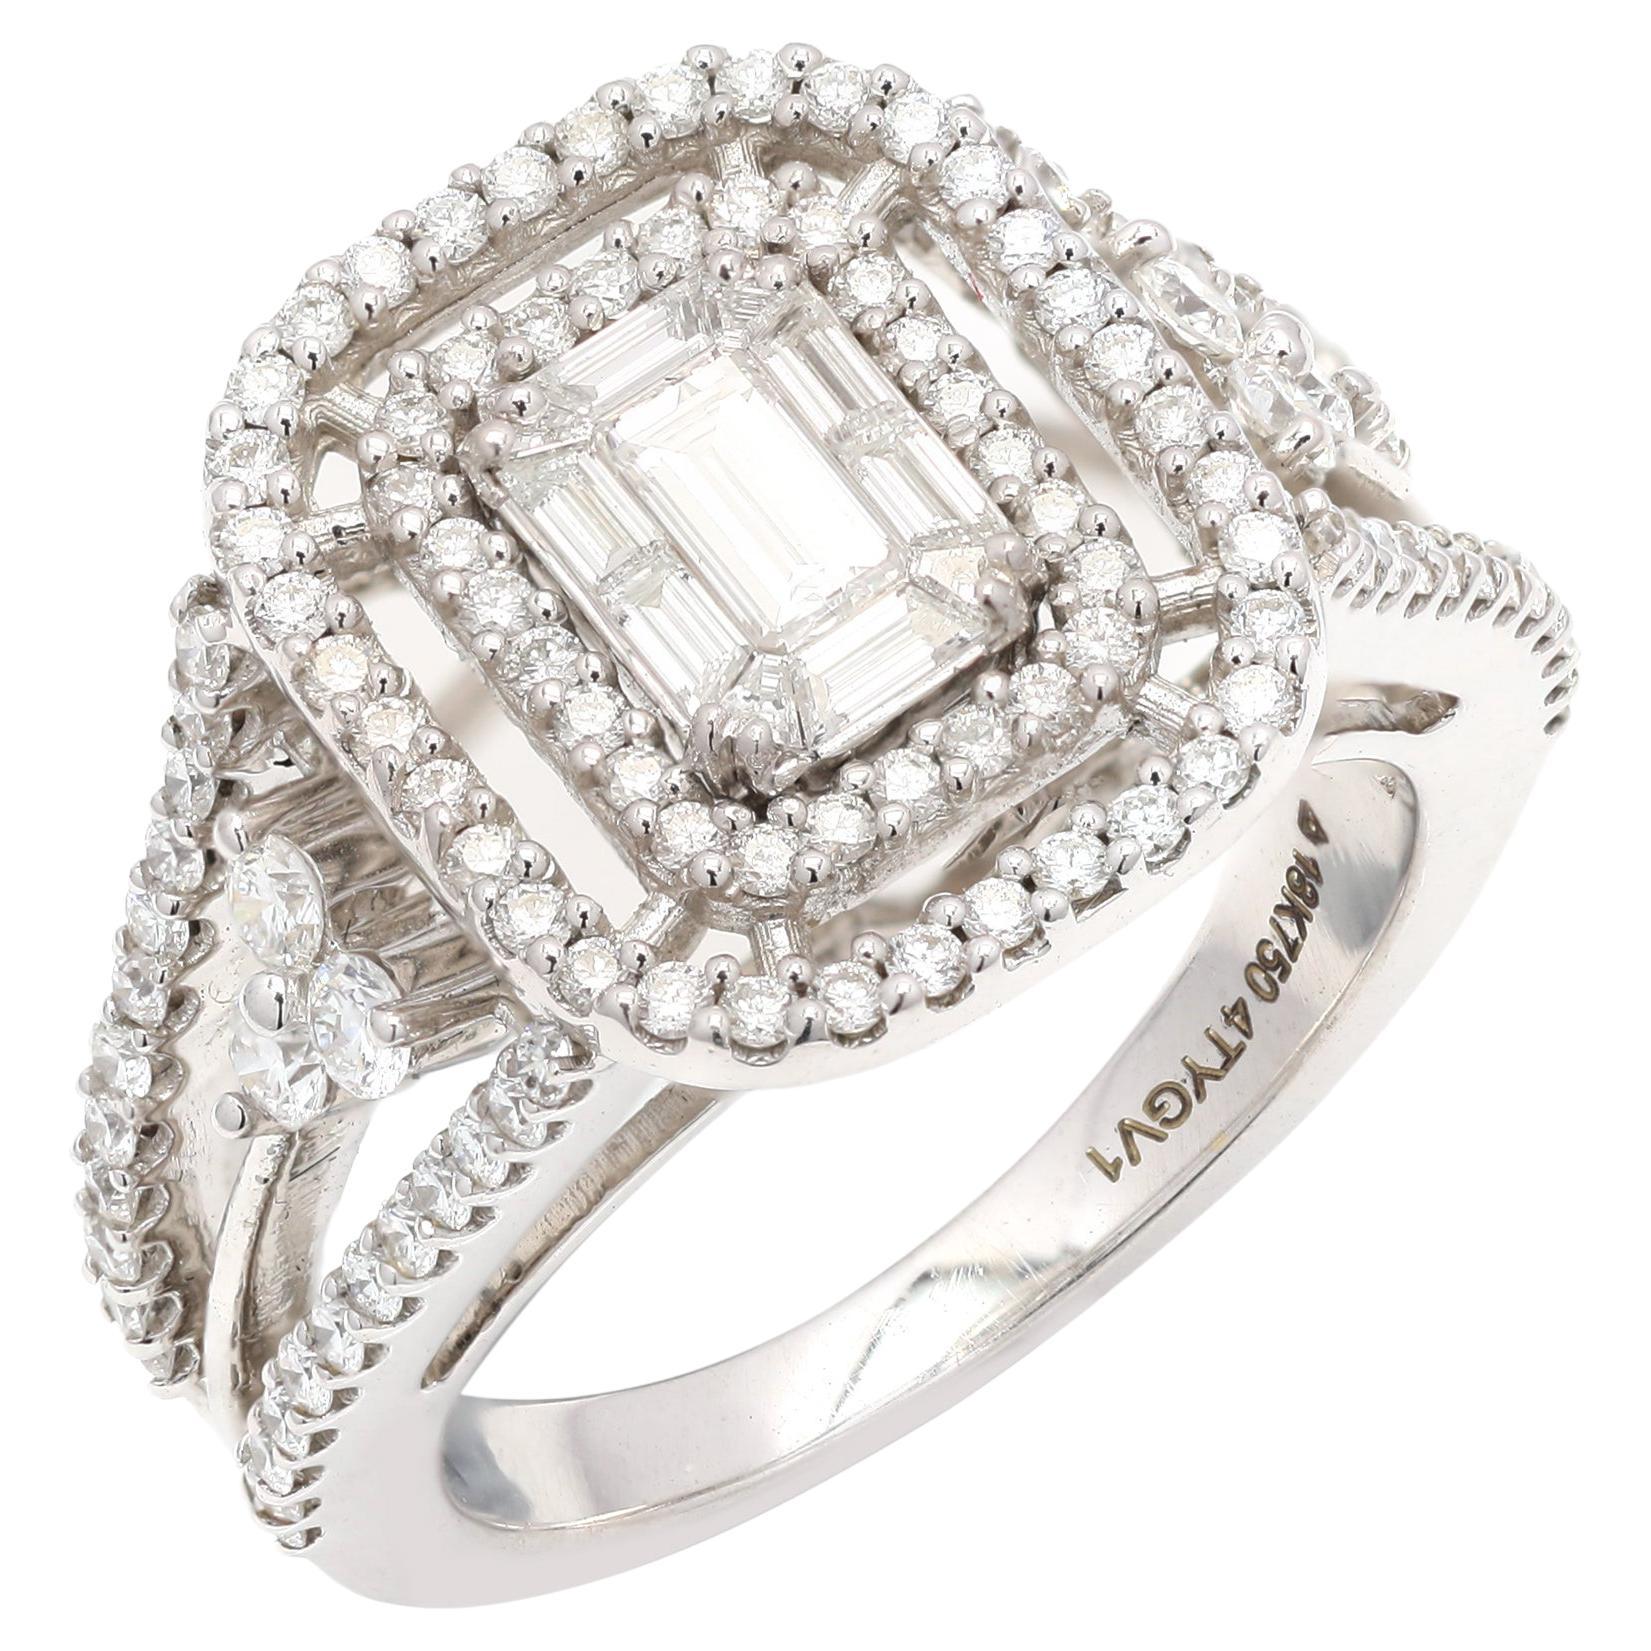 Stunning 1.38ct Natural Diamond Engagement Ring in 18k White Gold